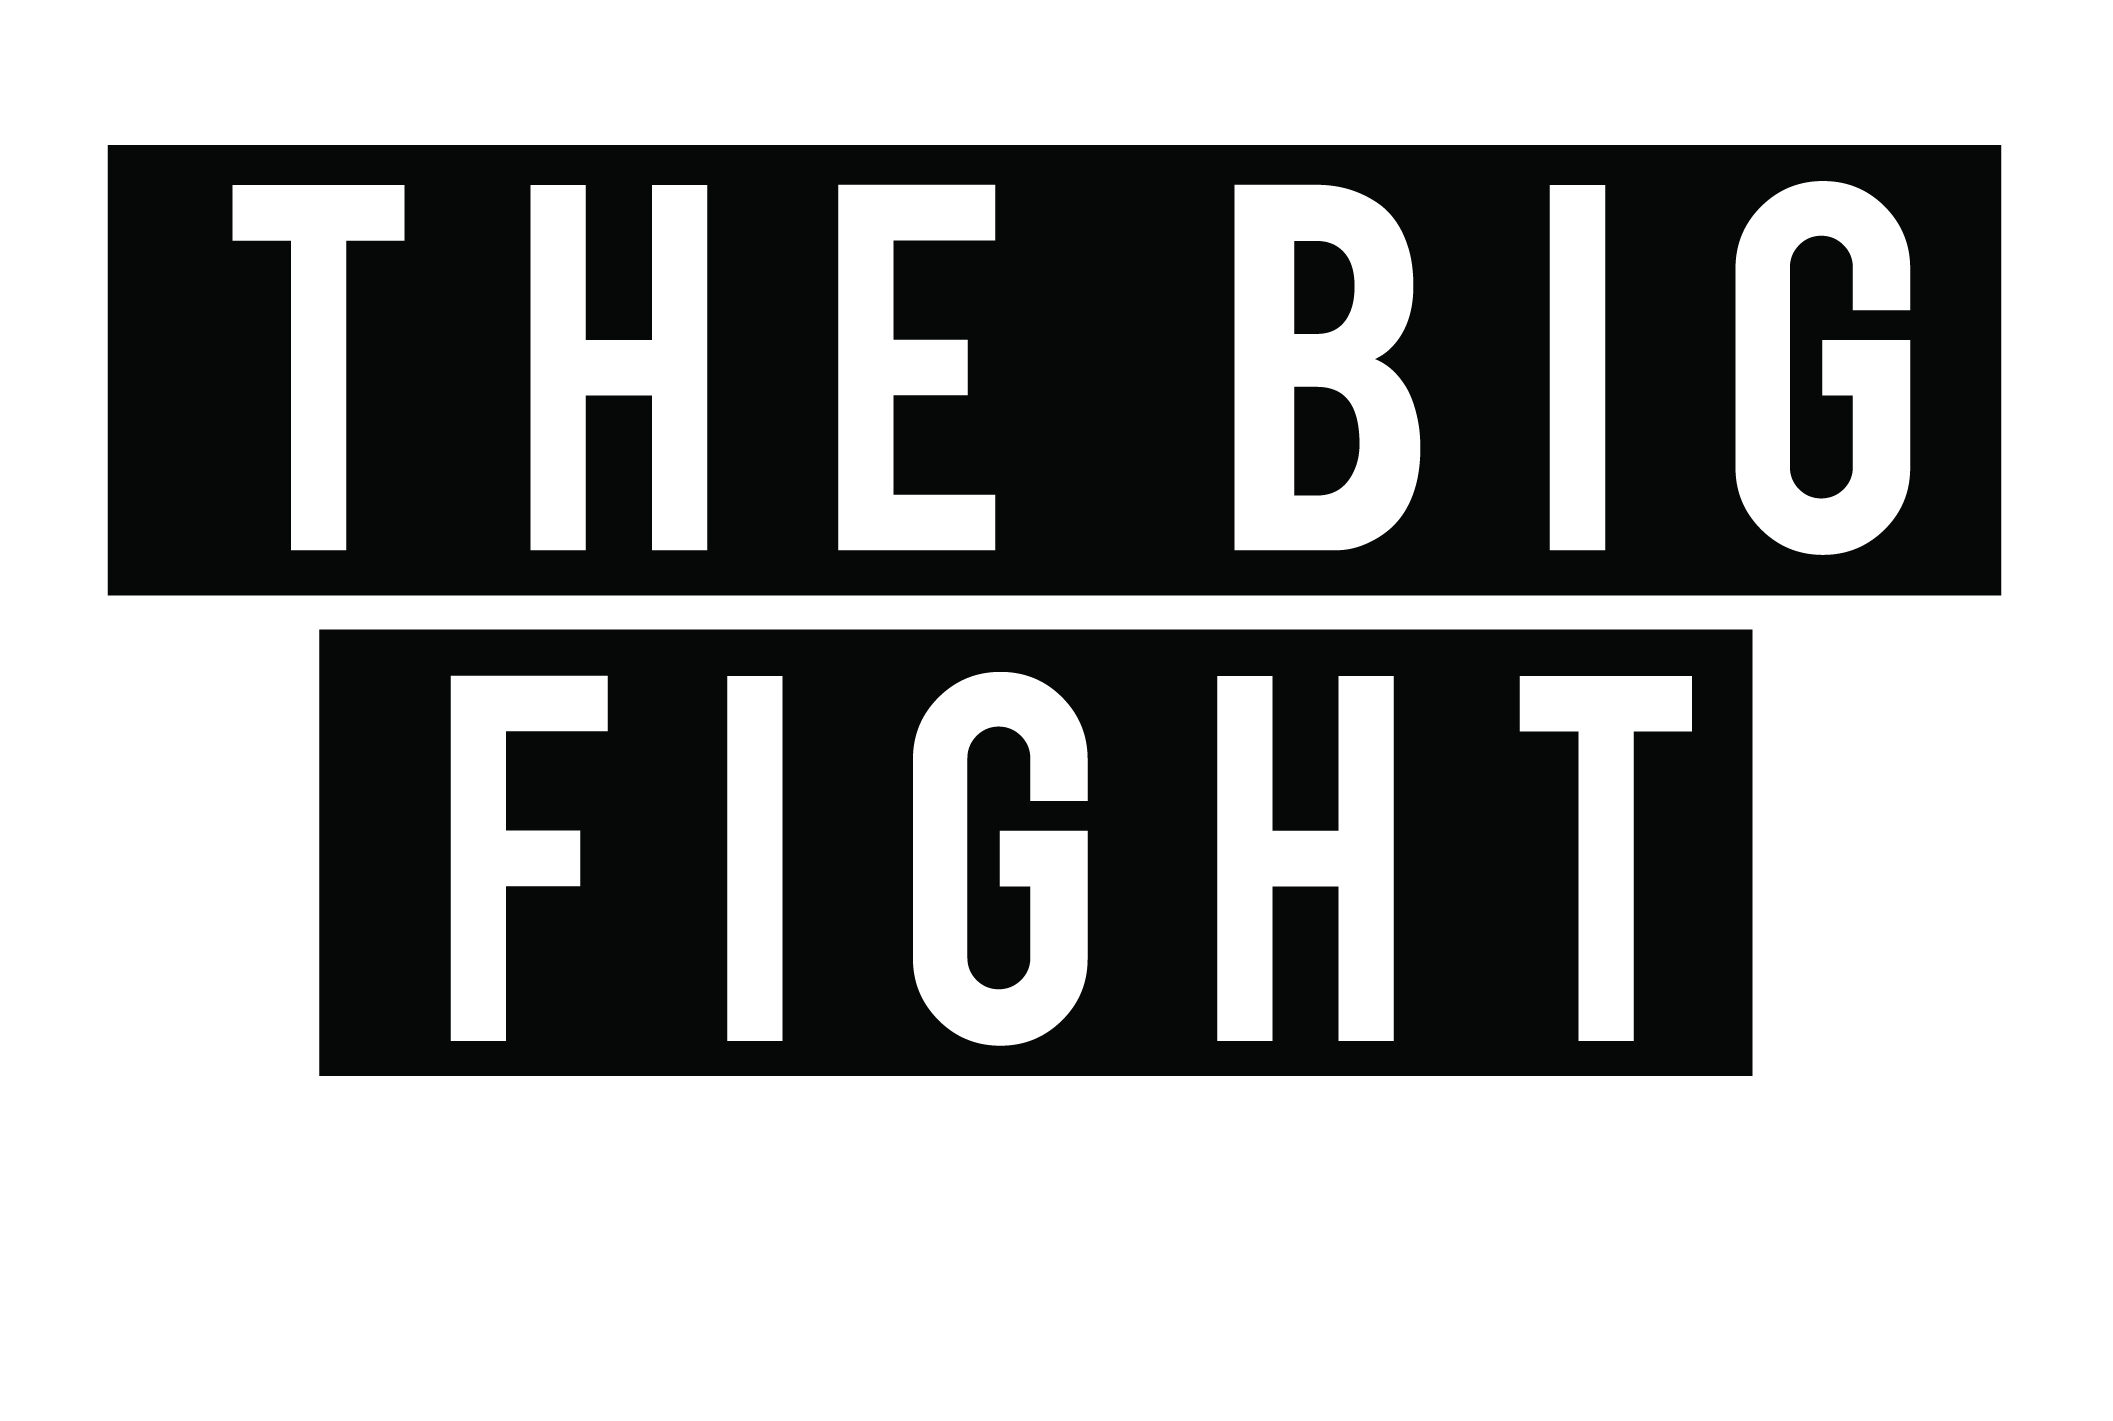 THE BIG FIGHT